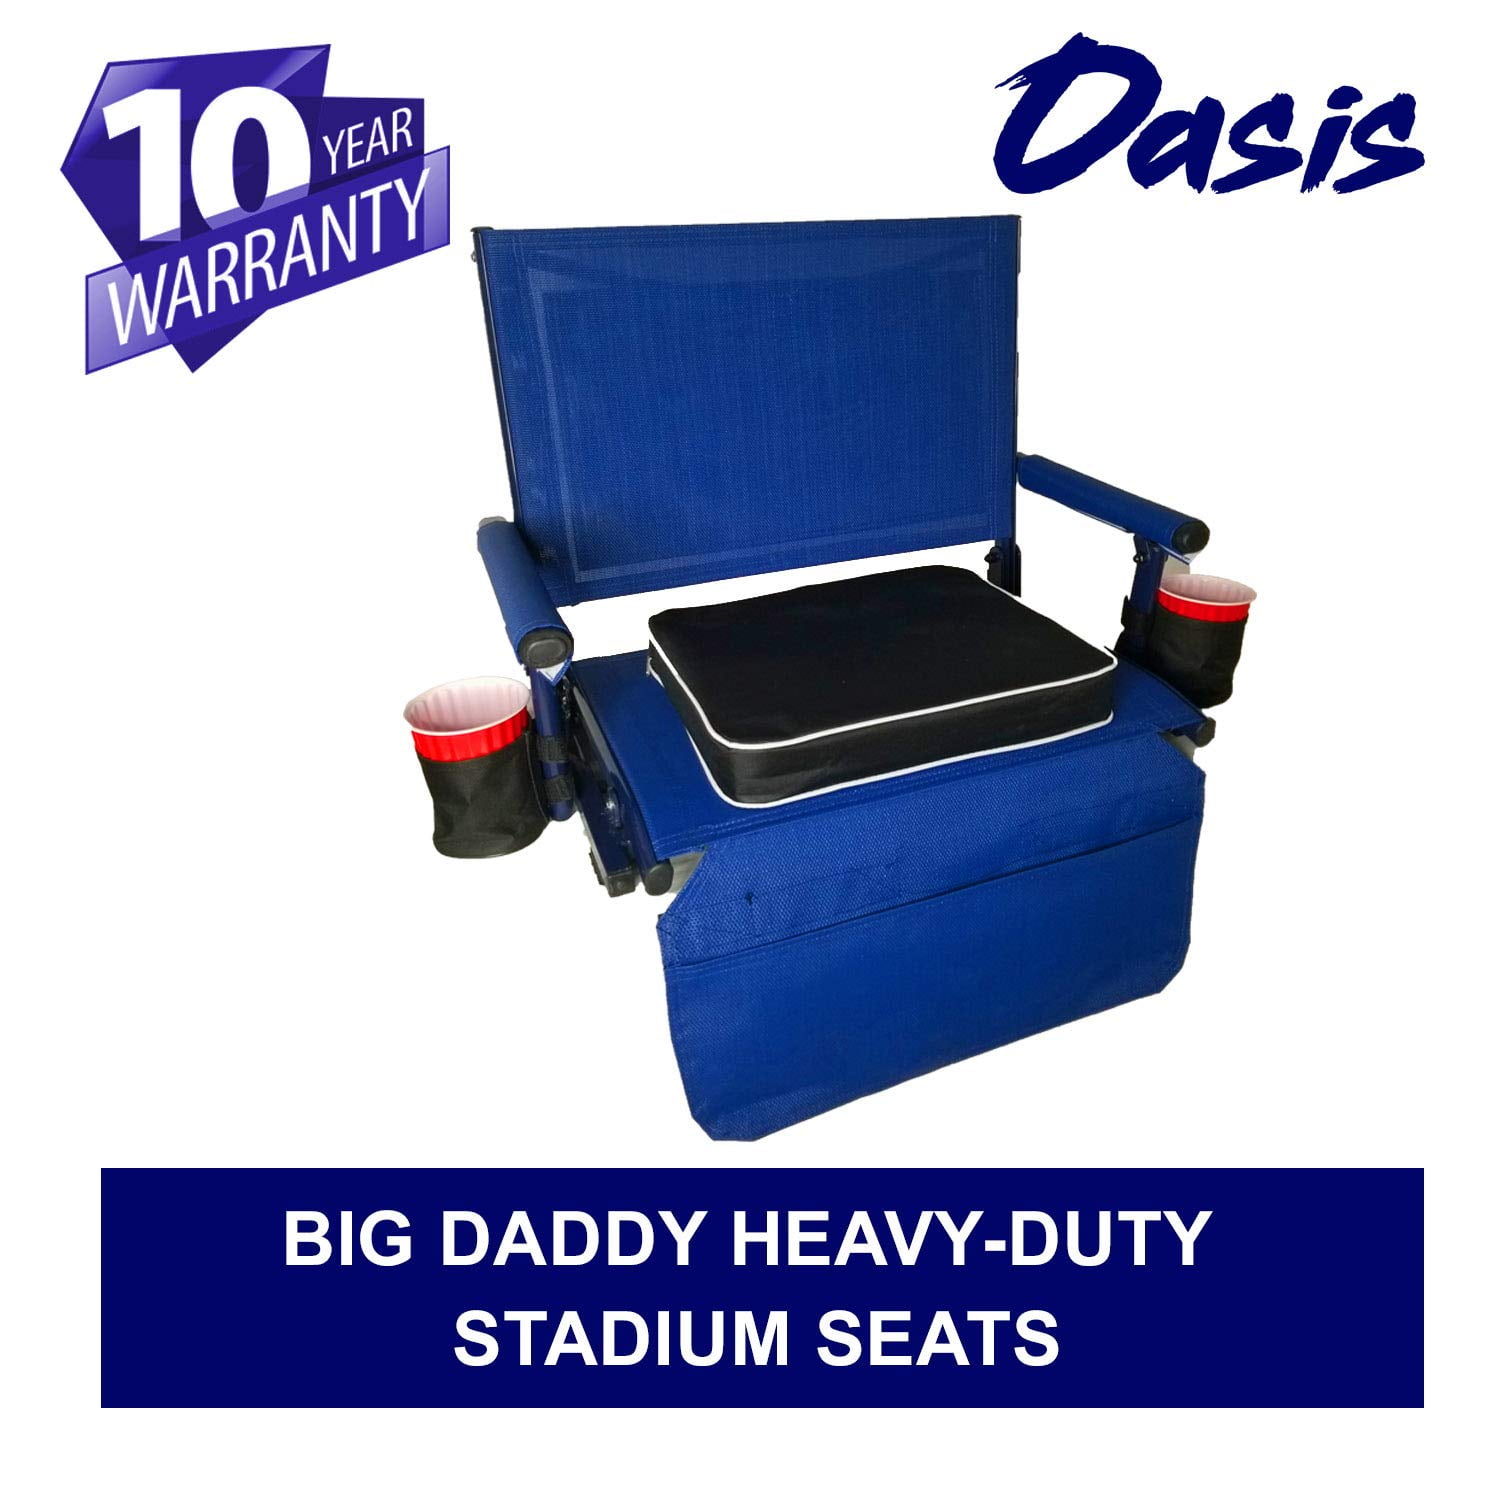 Oasis Big Daddy Super Heavy Duty Stadium Seat   Portable & Easy